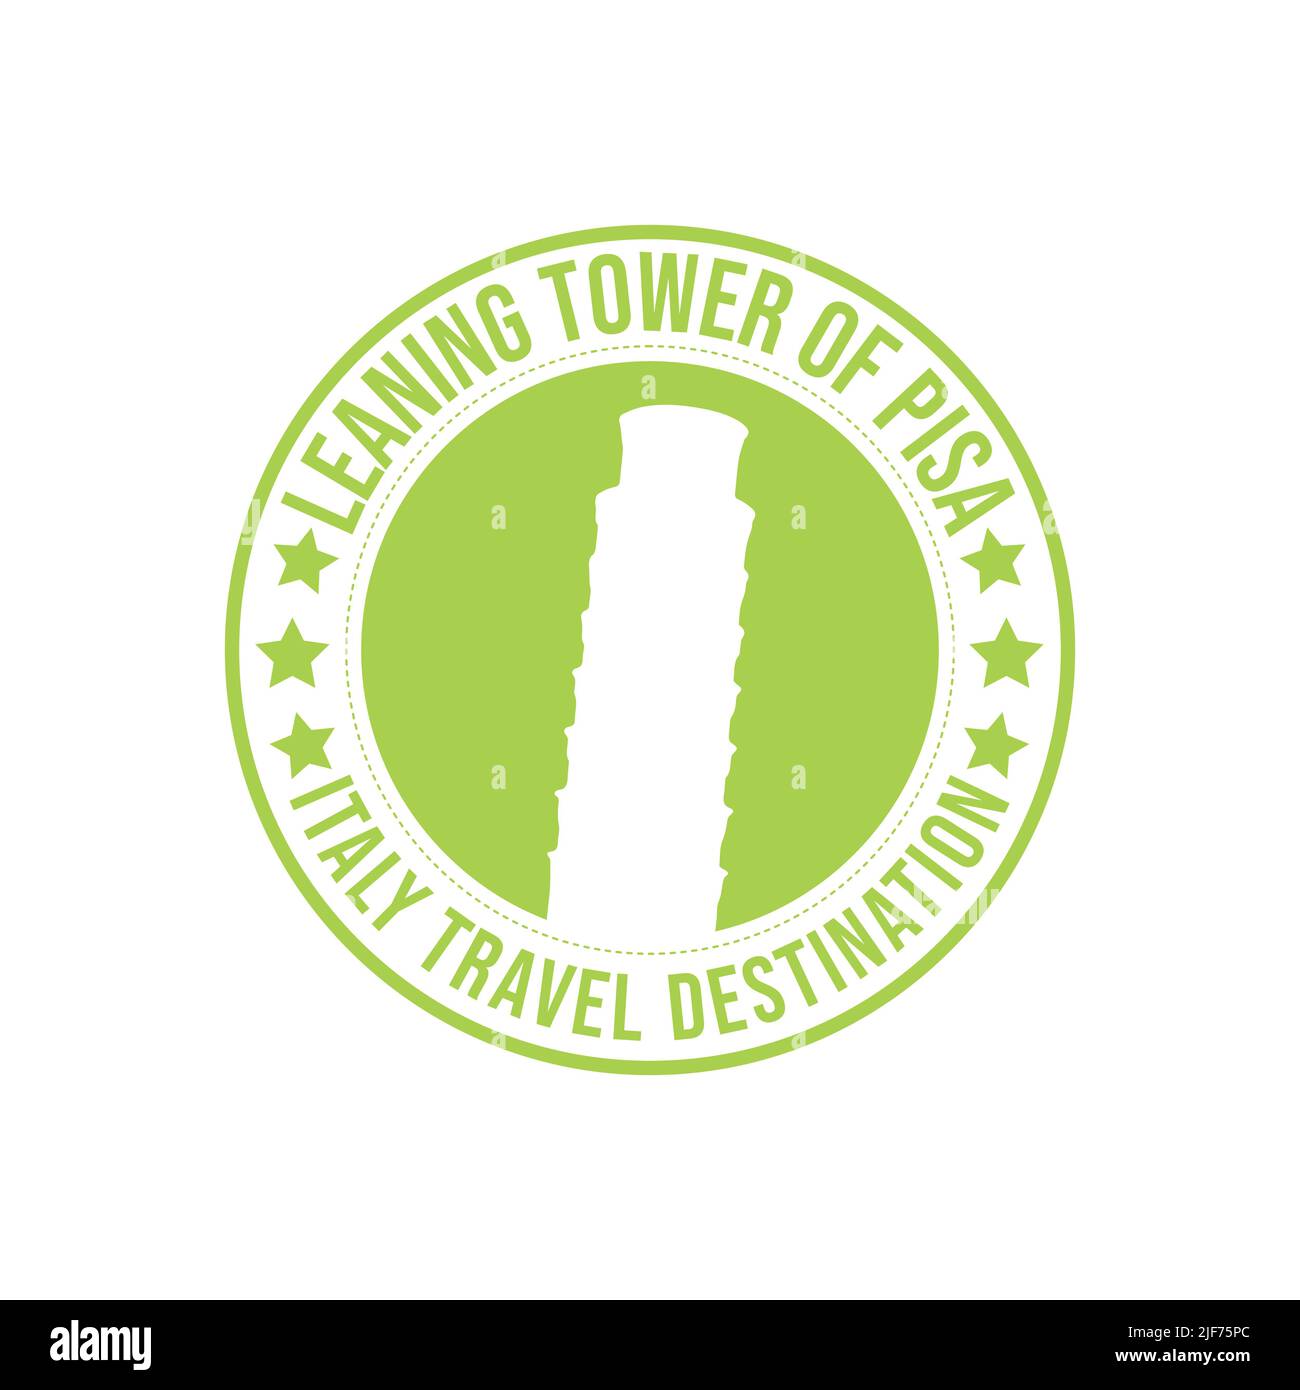 Kreis-Stempel mit dem Pisa schiefen Turm Reise Ziel in der Marke geschrieben. Historische Turmbau in Italien. Italien Reise Ziel Stock Vektor